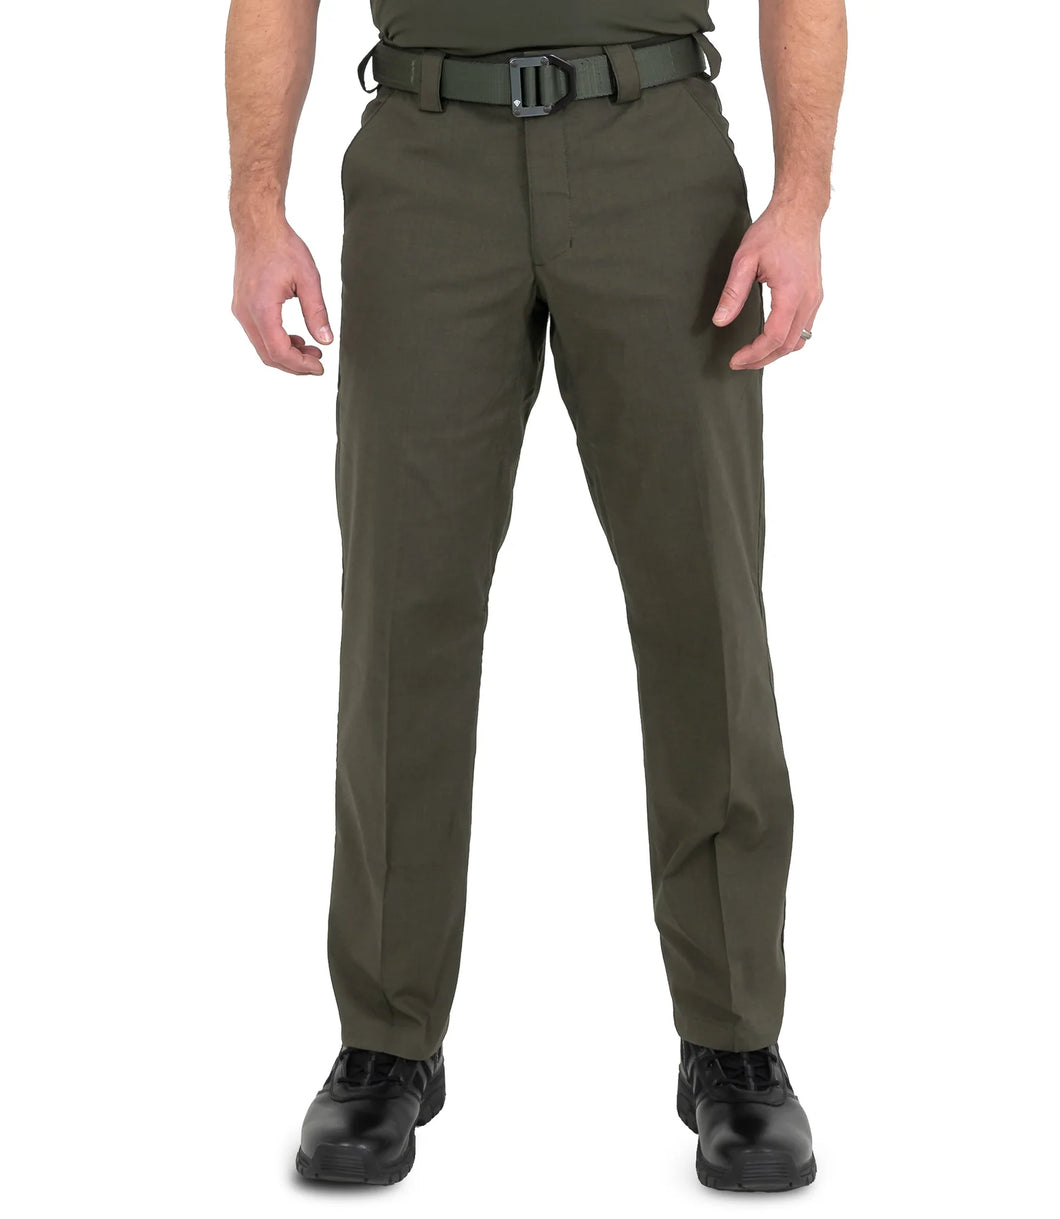 First Tactical V2 Pro Duty Uniform Pant OD Green